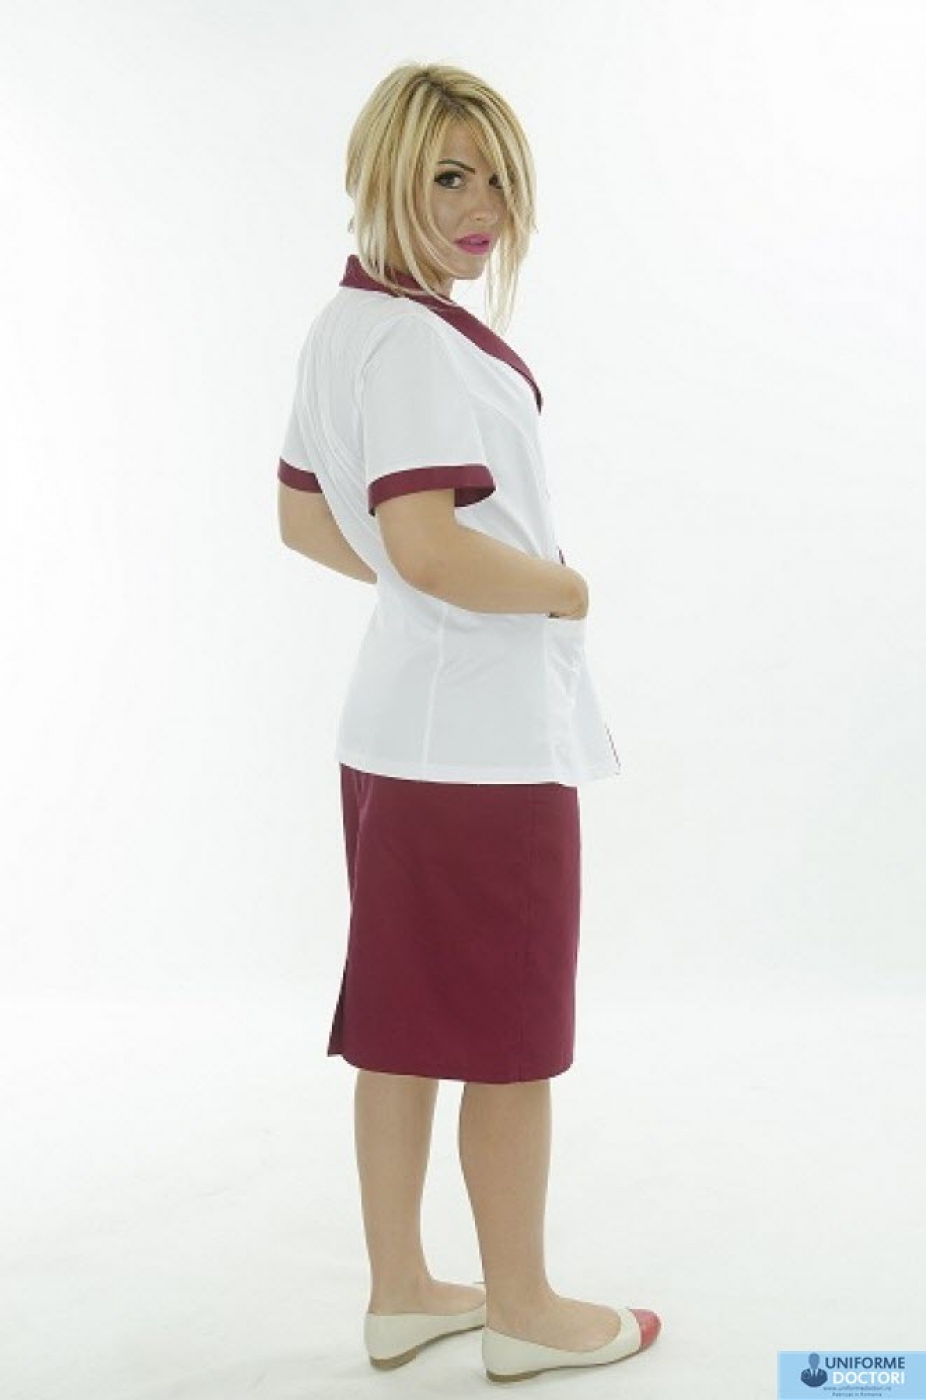 Uniforme medicale - Halat medical cu guler sal, maneca scurta, model bicolor